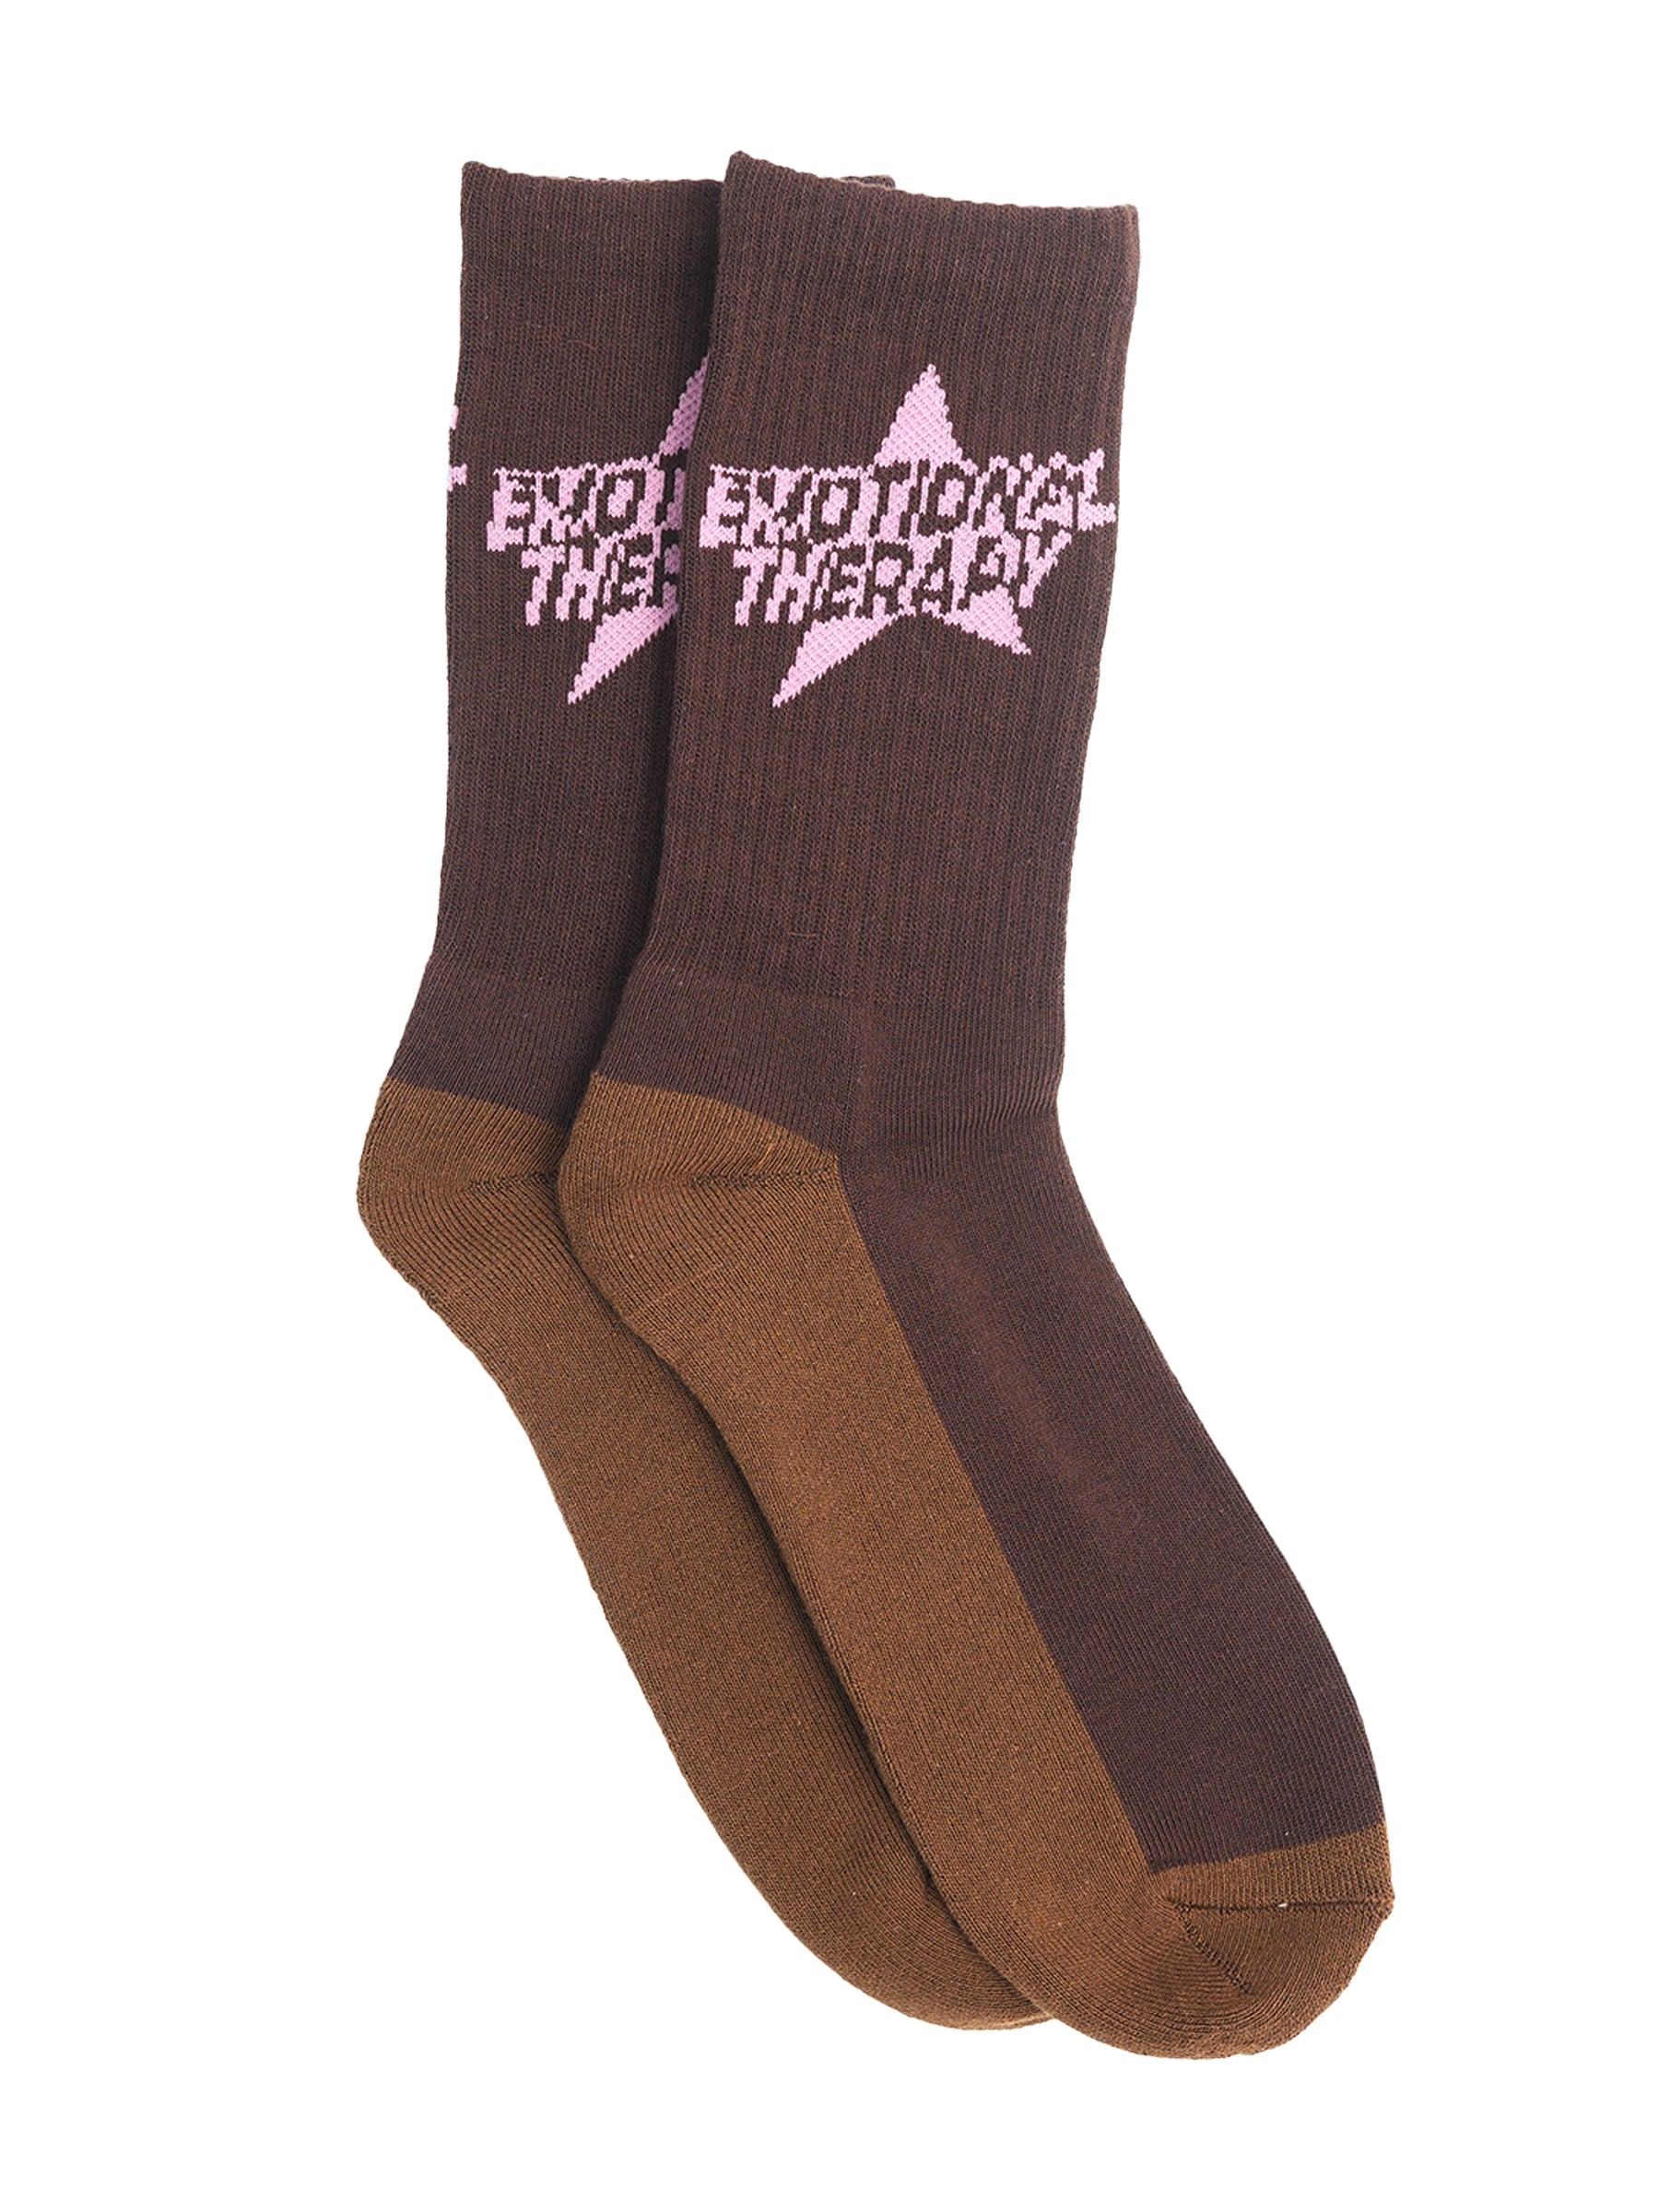 Star Socks (Brown + Pink)